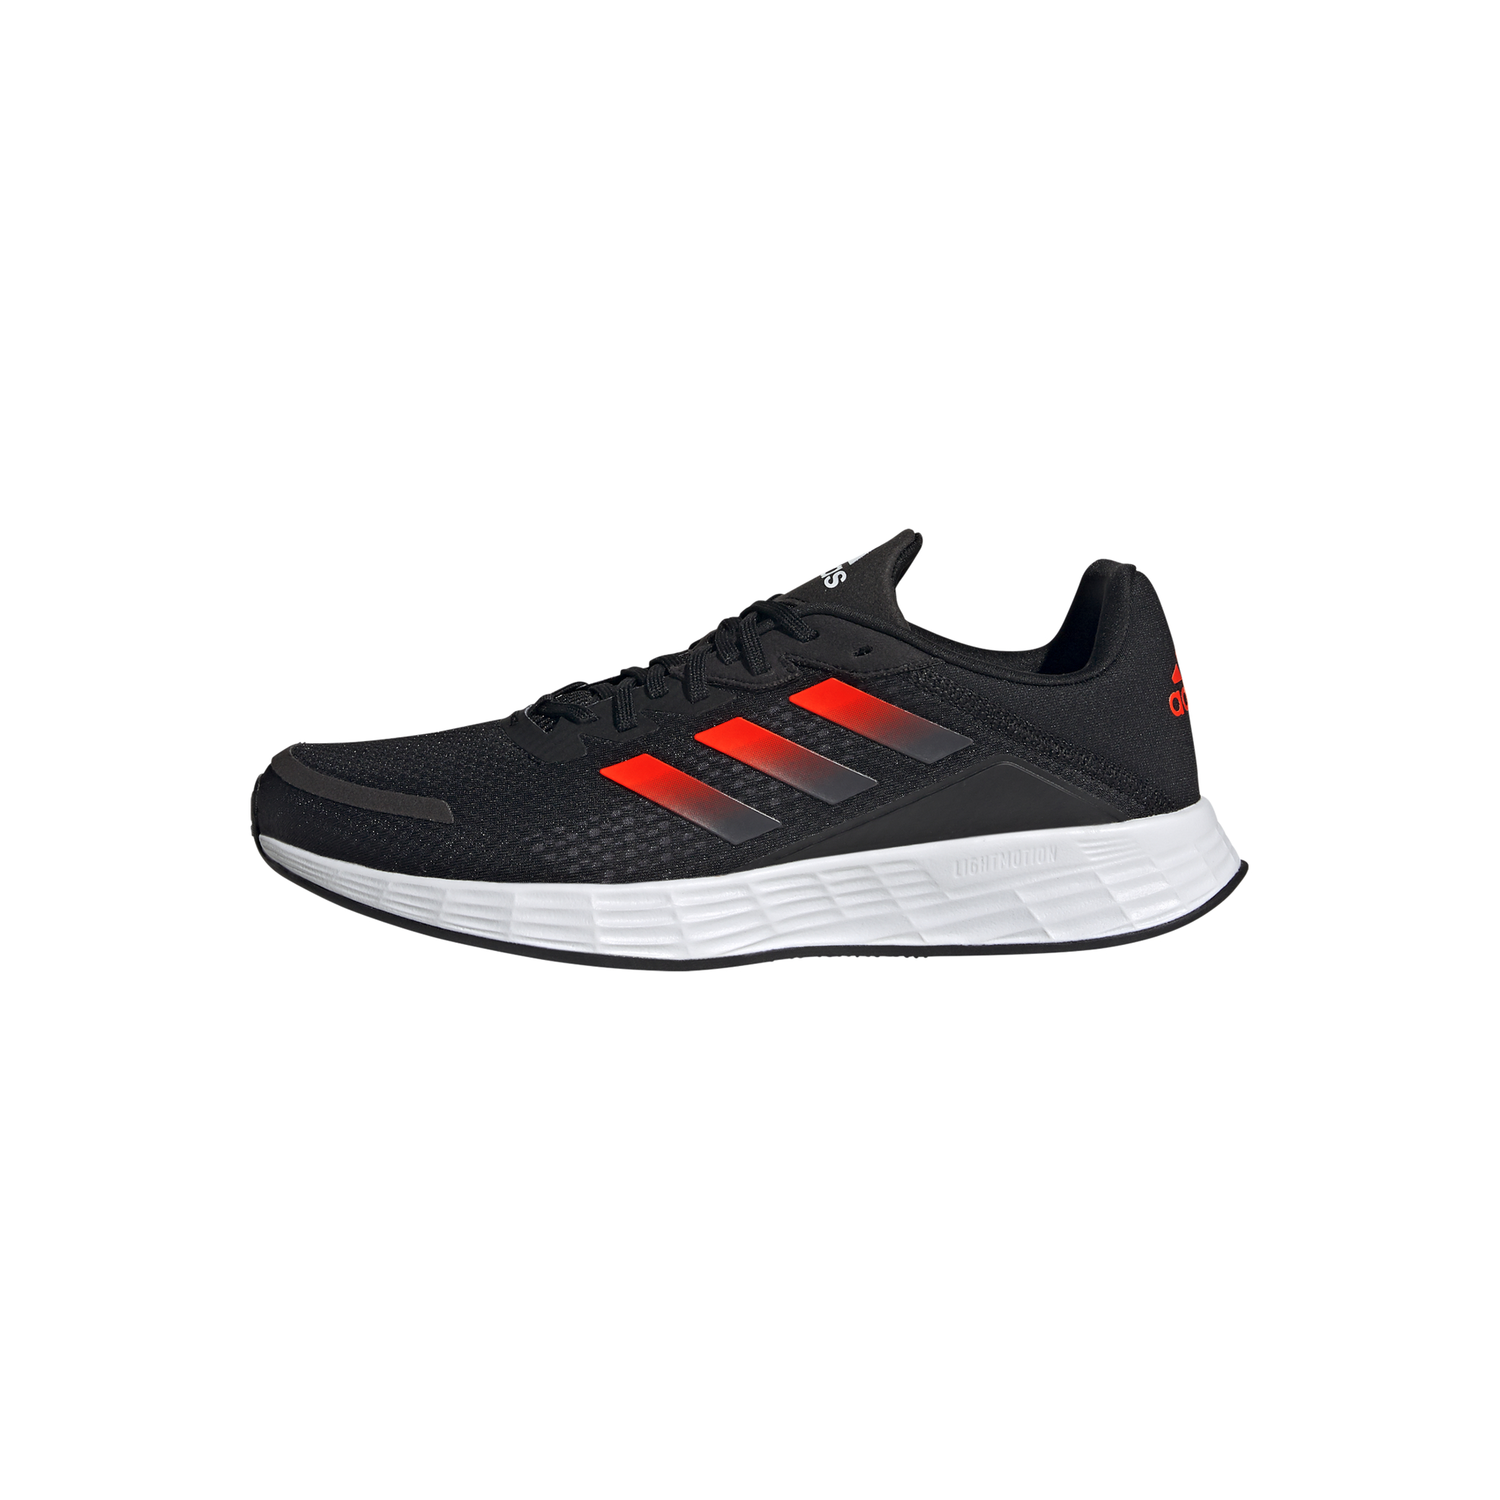 Adidas Duramo SL - Mens Running Shoes - Black/Solar Red/Carbon | Sportitude